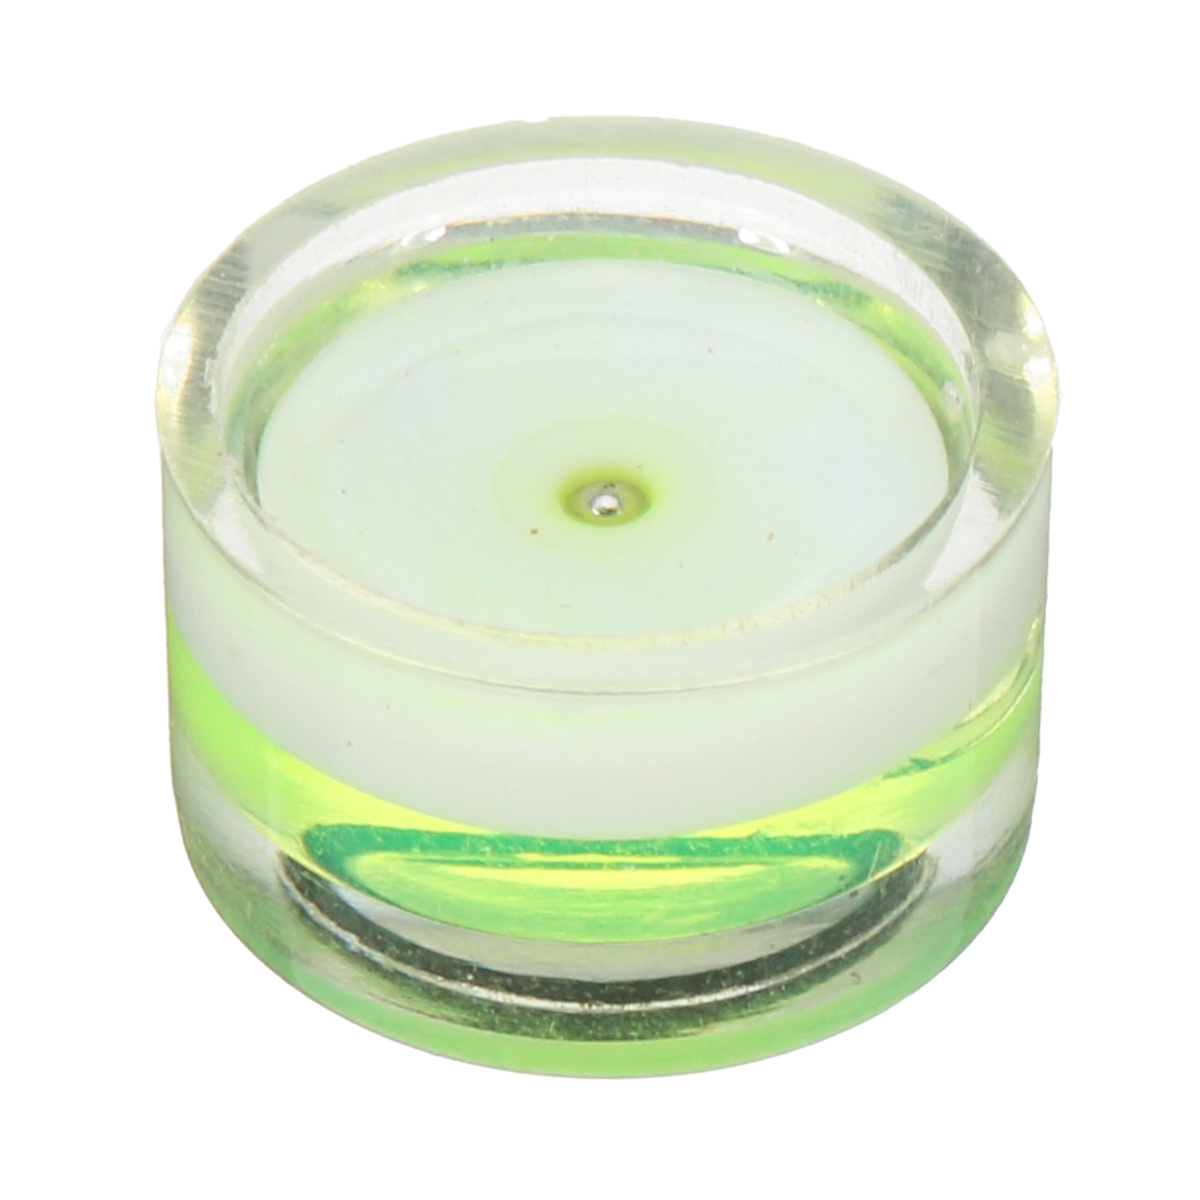 12x7mm-Tiny-Disc-Bubble-Spirit-Level-Round-Circle-Circular-Green-Tripod-1318440-4